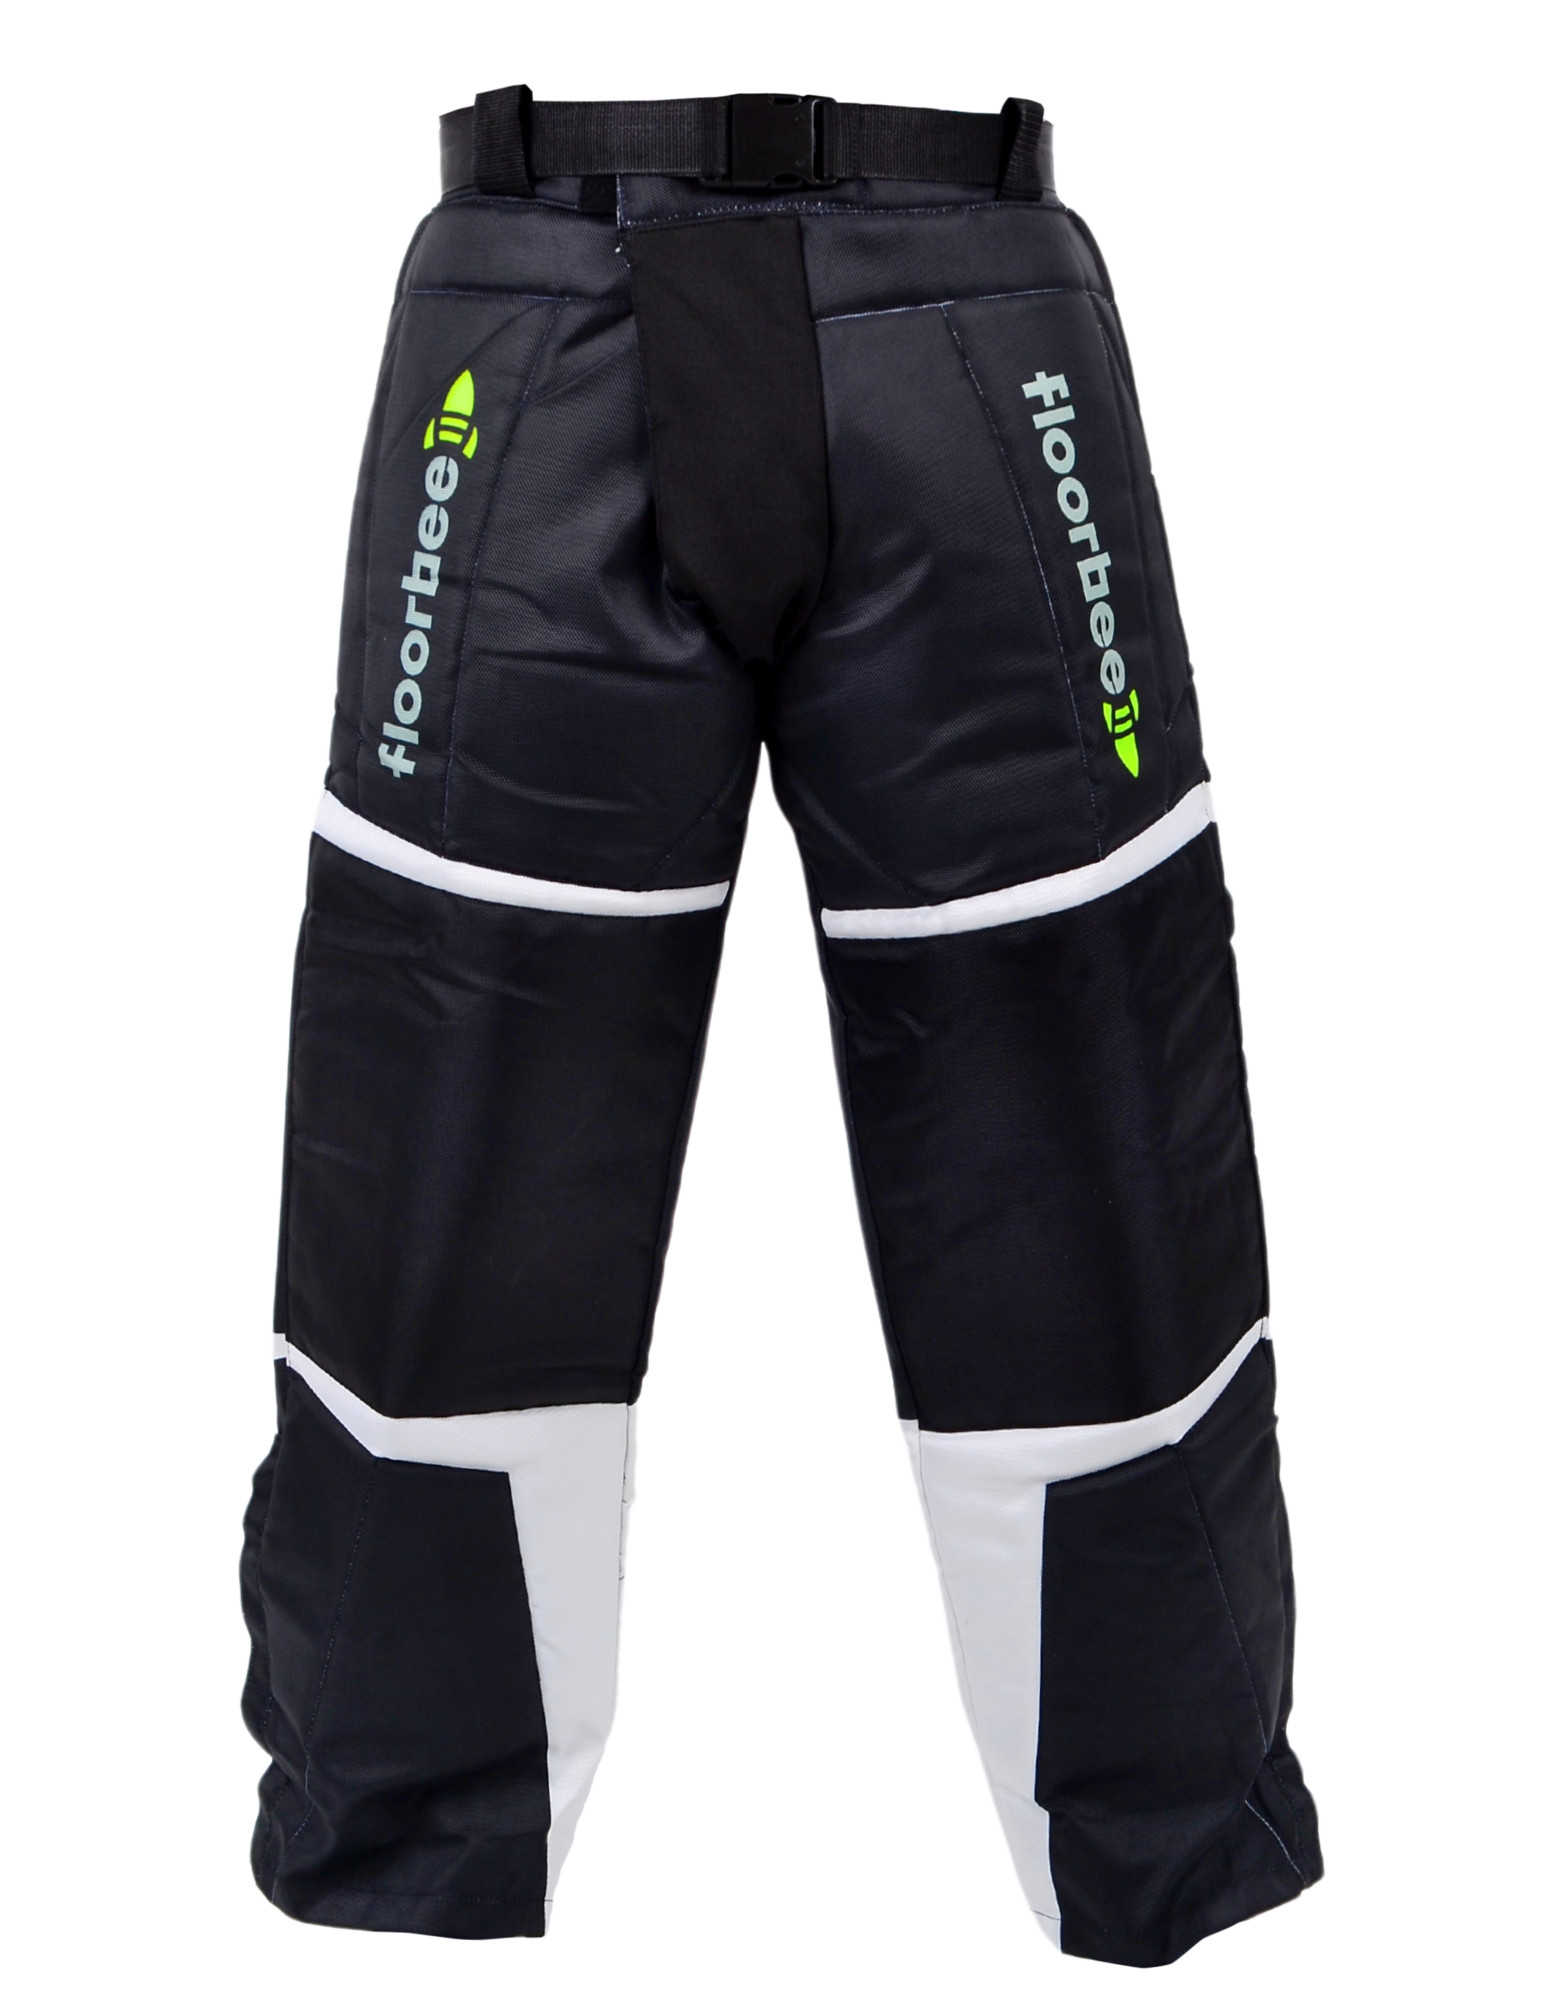 FLOORBEE Goalie Armor Pants 3.0 - black/white XL, černá / bílá